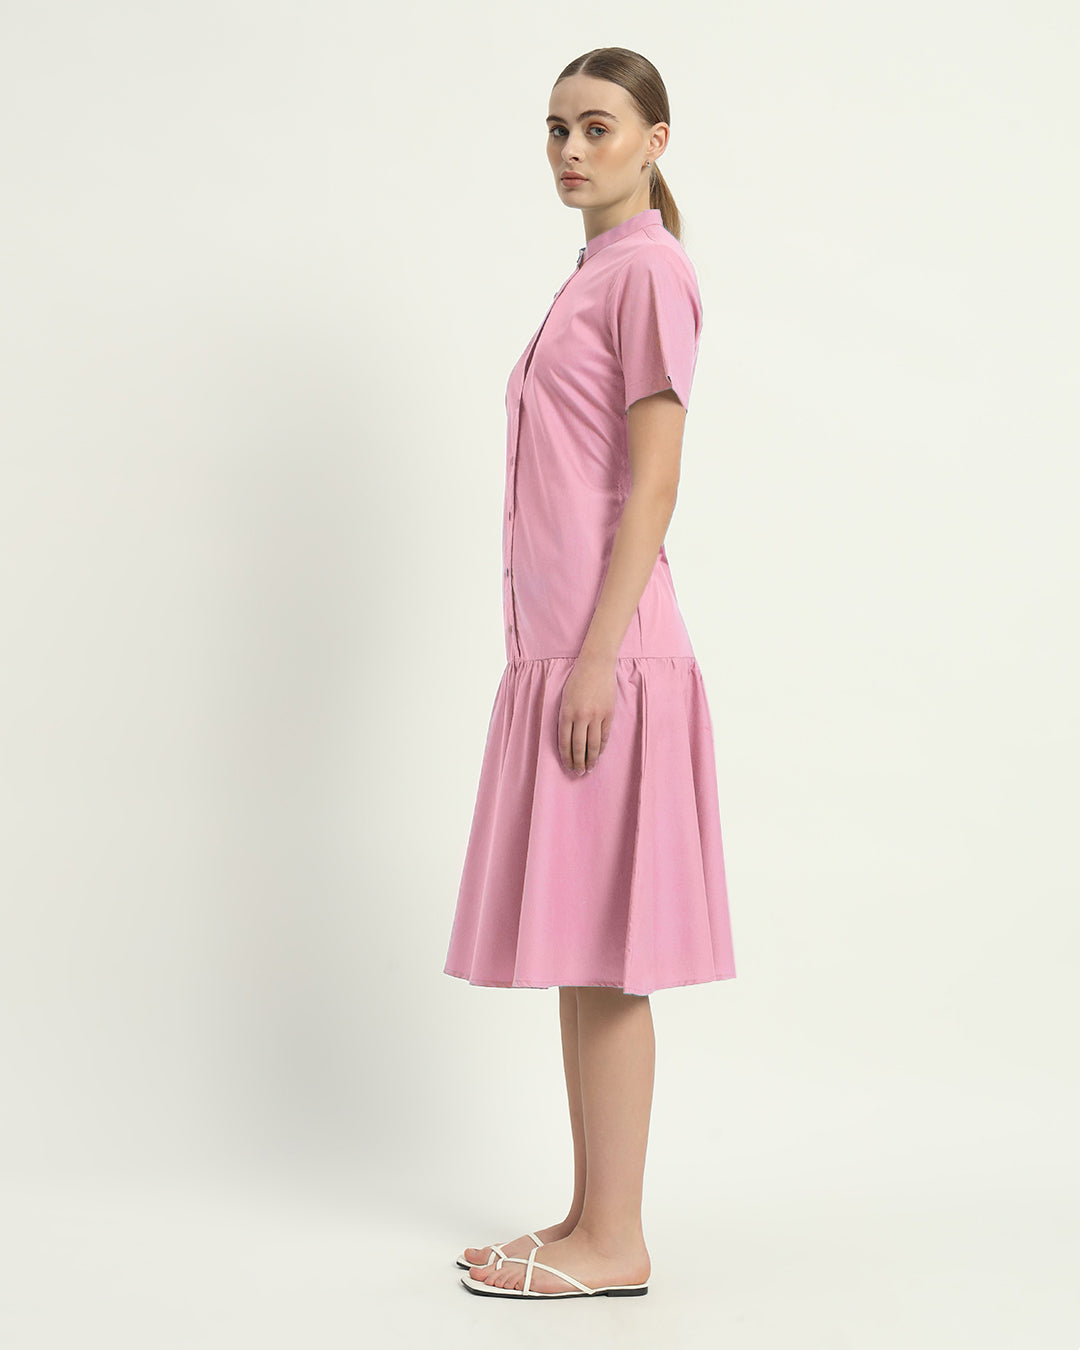 The Fondant Pink Melrose Cotton Dress